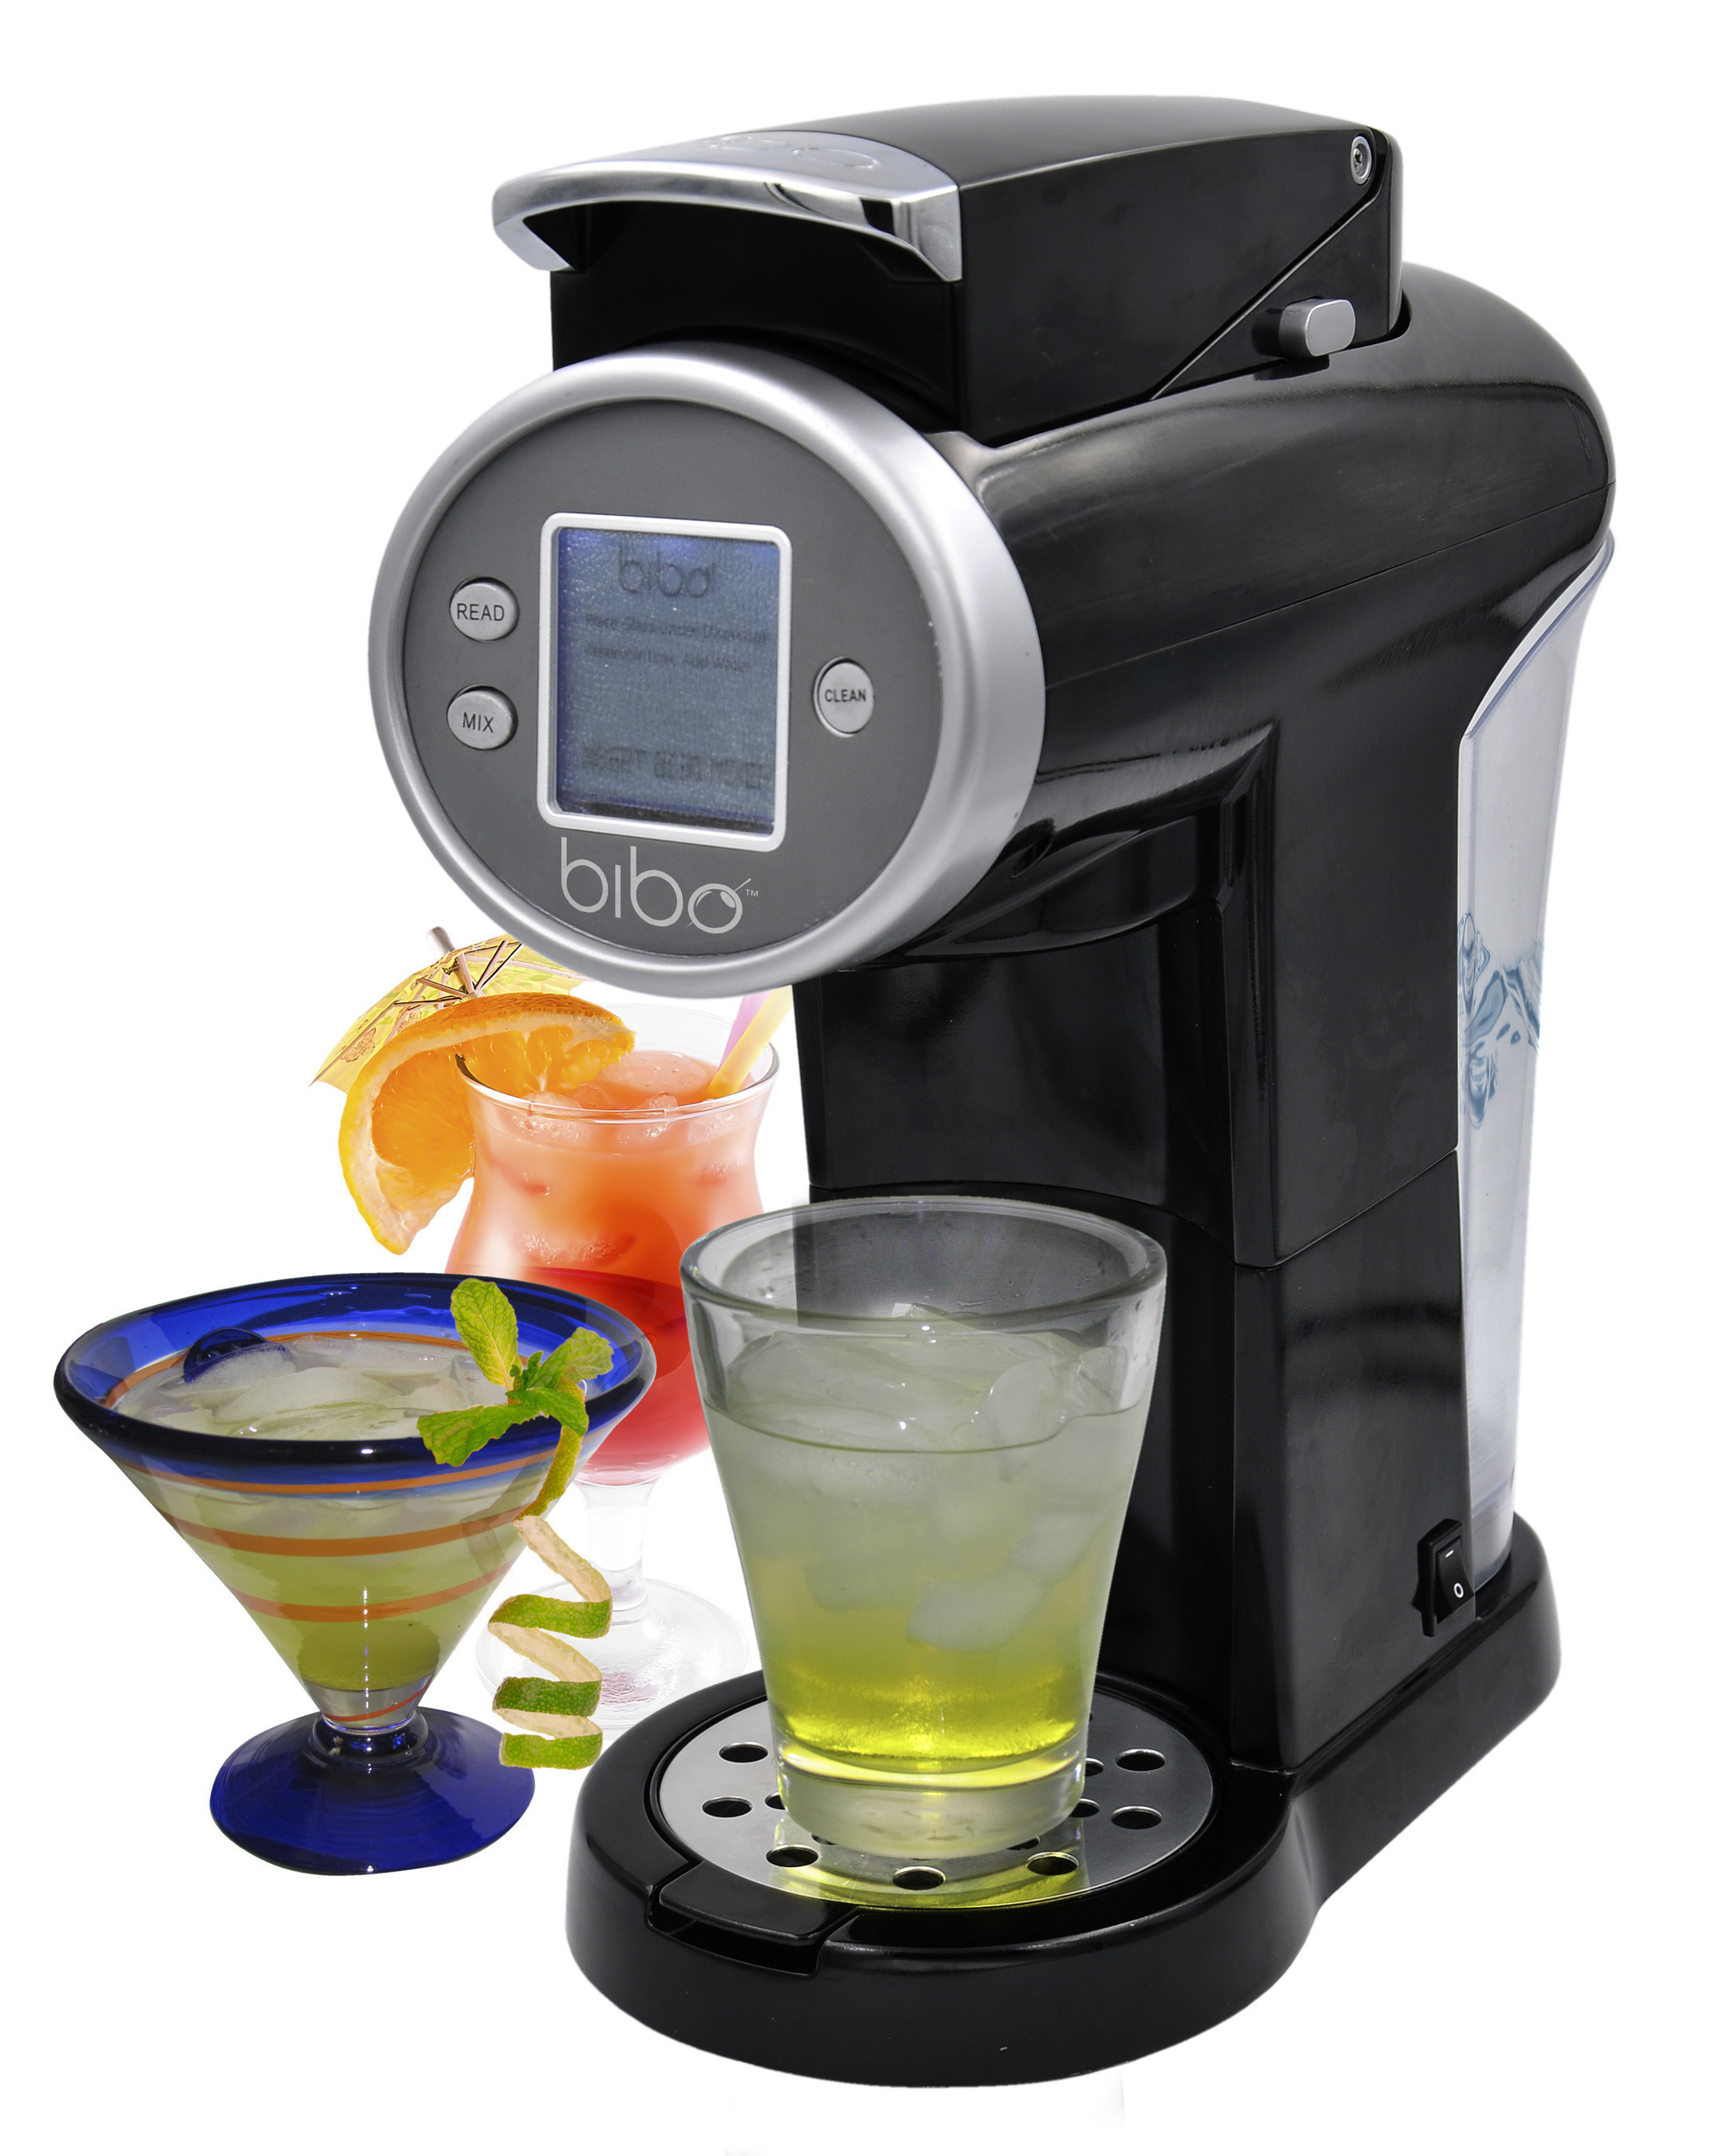 Bibo Barmaid®, a Smart Cocktail Machine That Makes Delicious